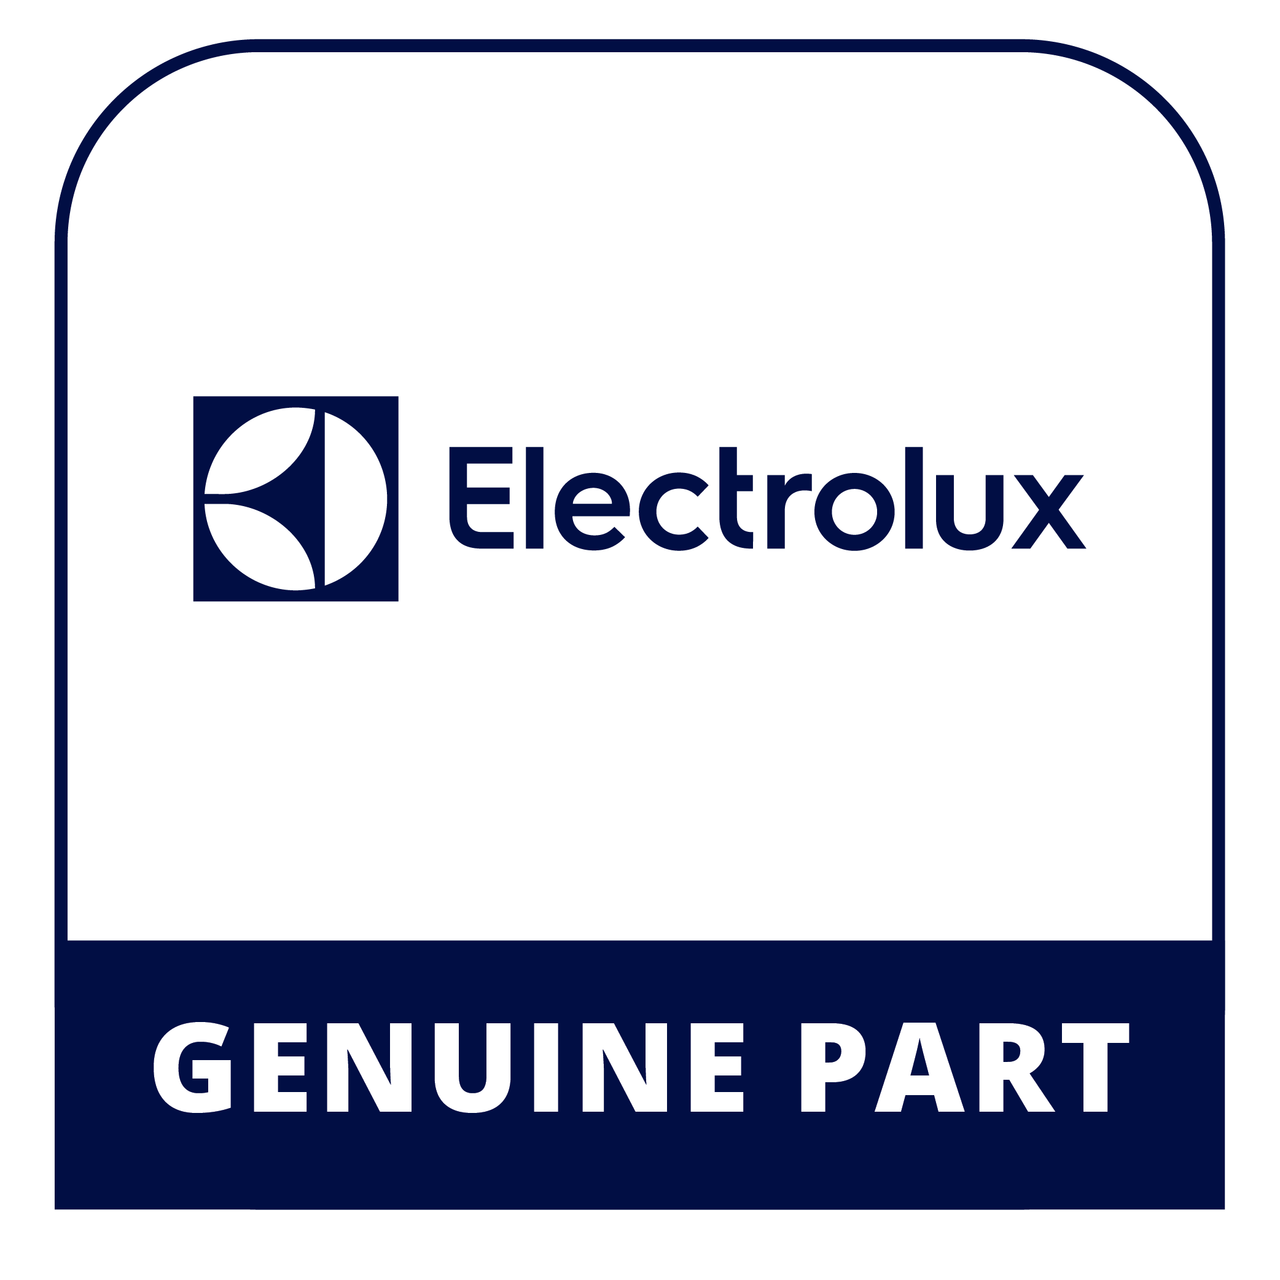 Frigidaire - Electrolux 5304496119 Card - Genuine Electrolux Part